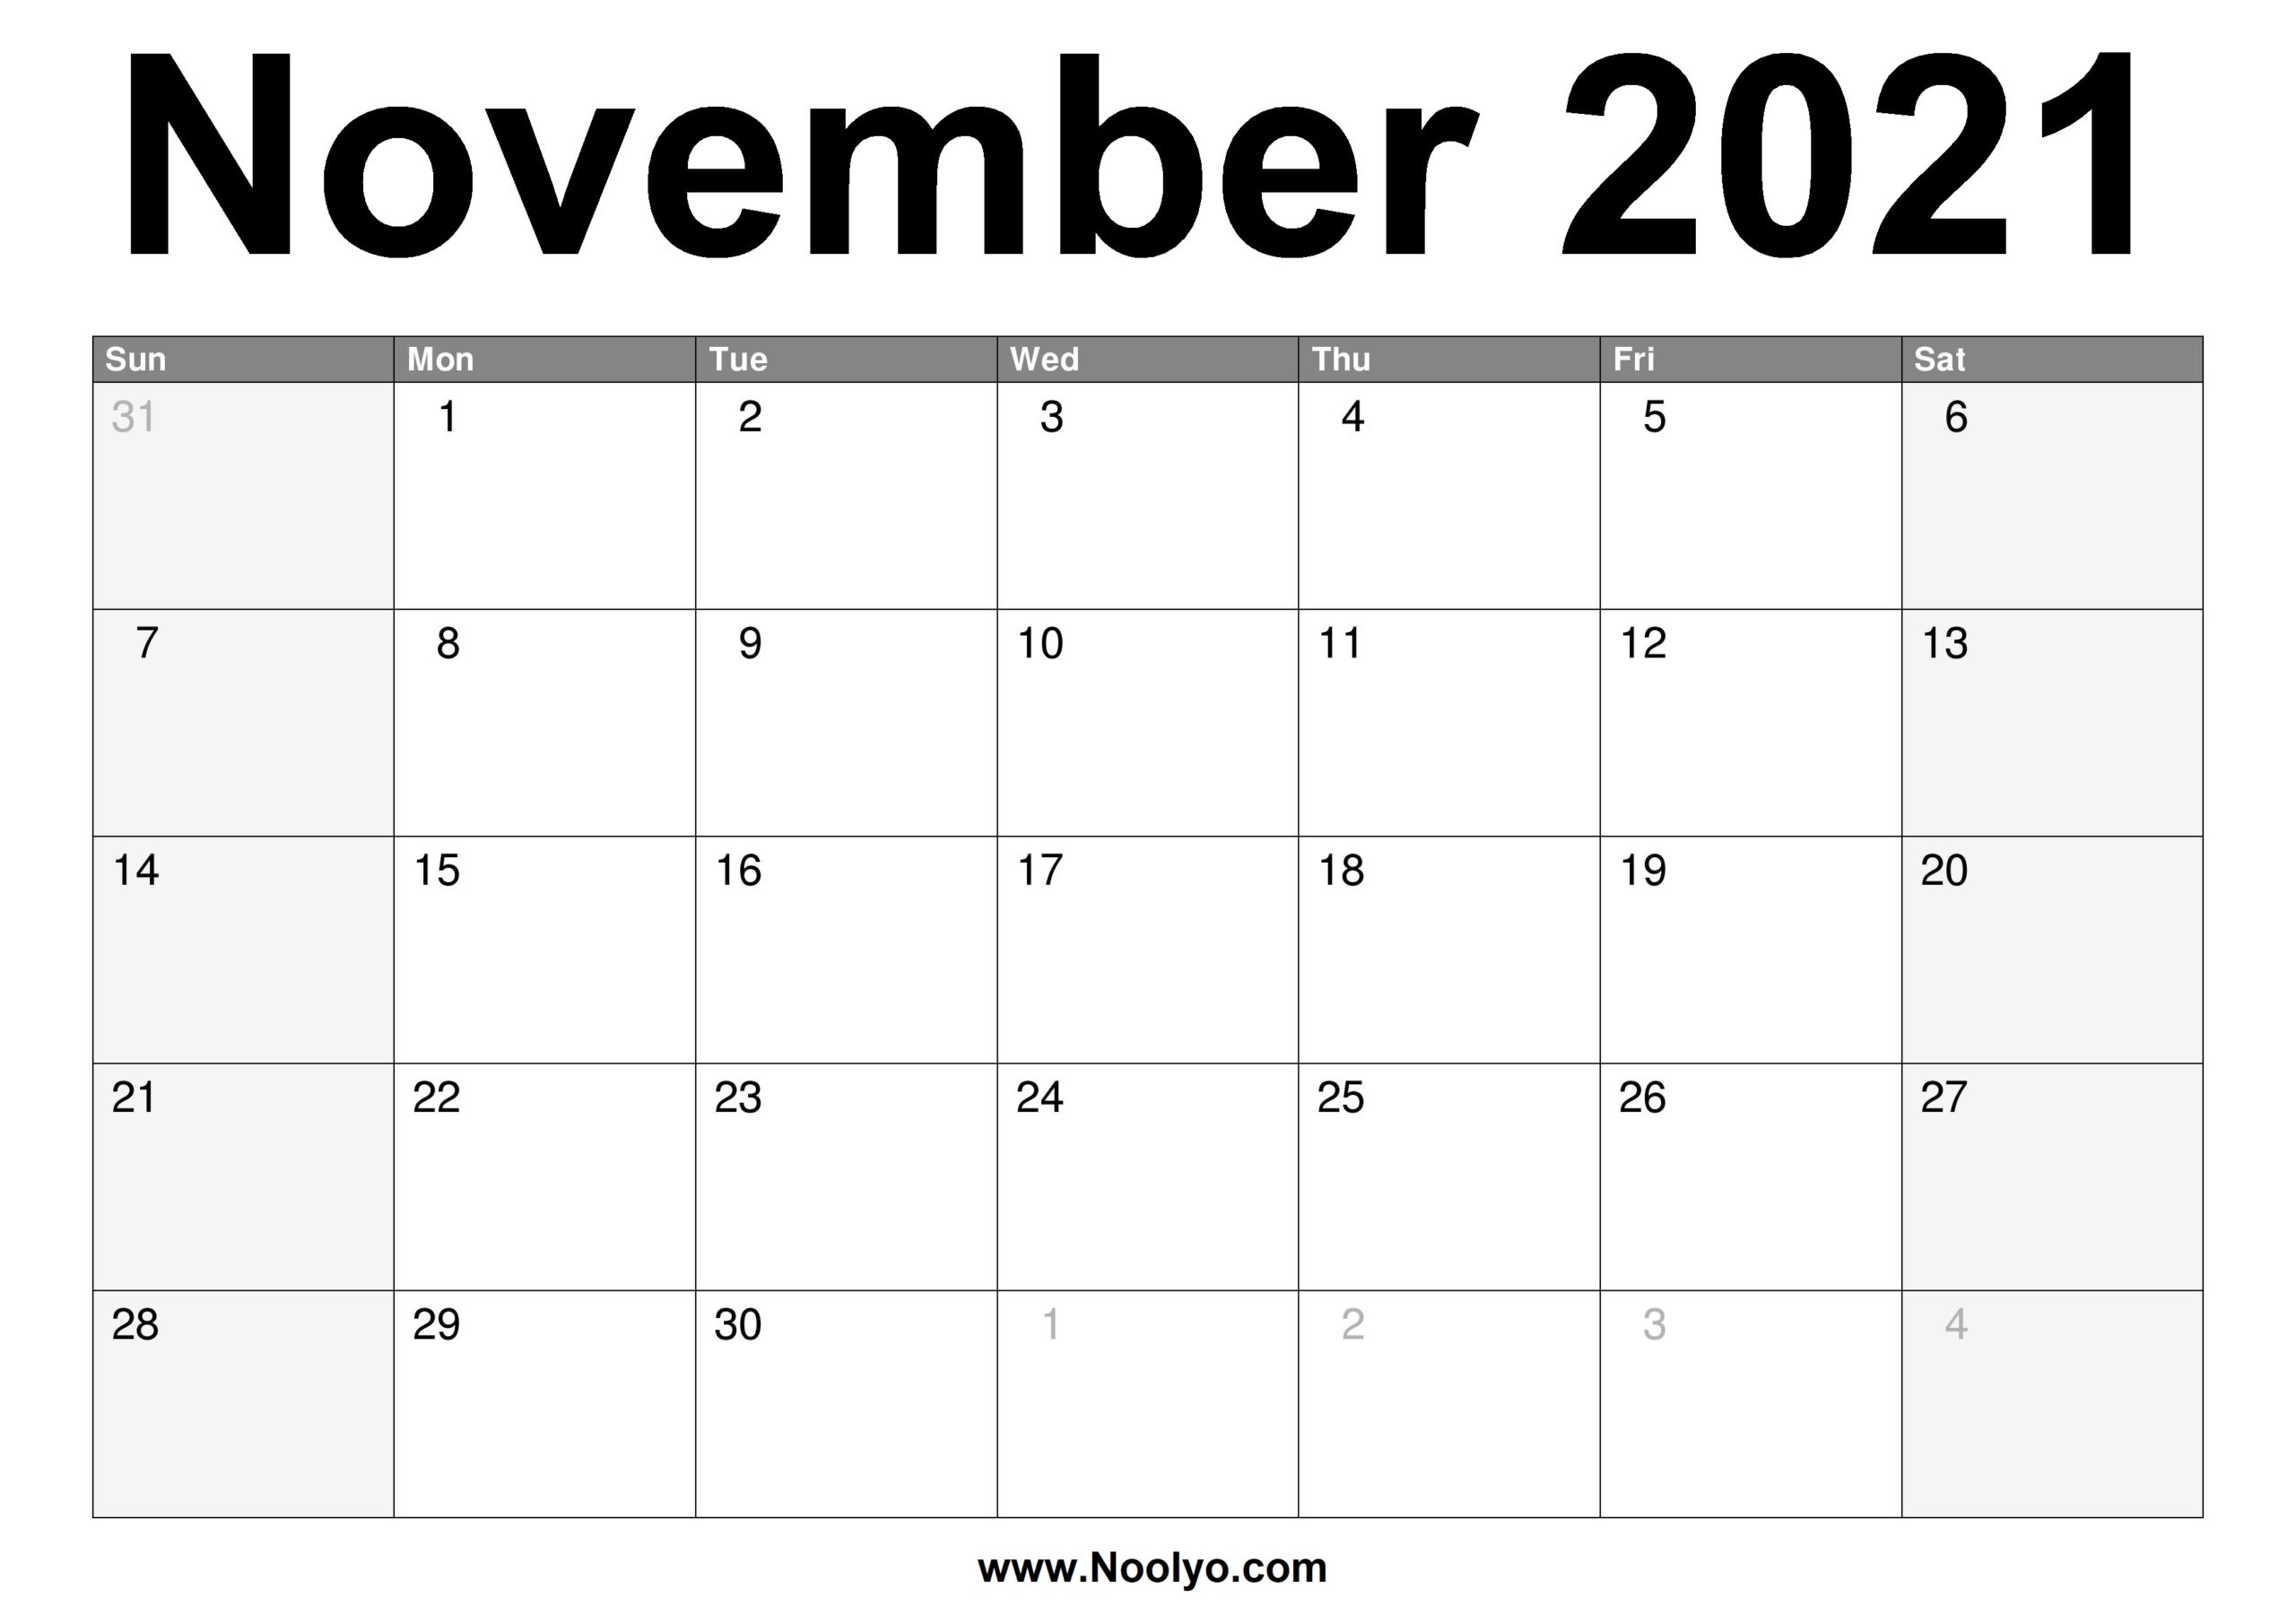 November 2021 Calendar Printable – Free Download